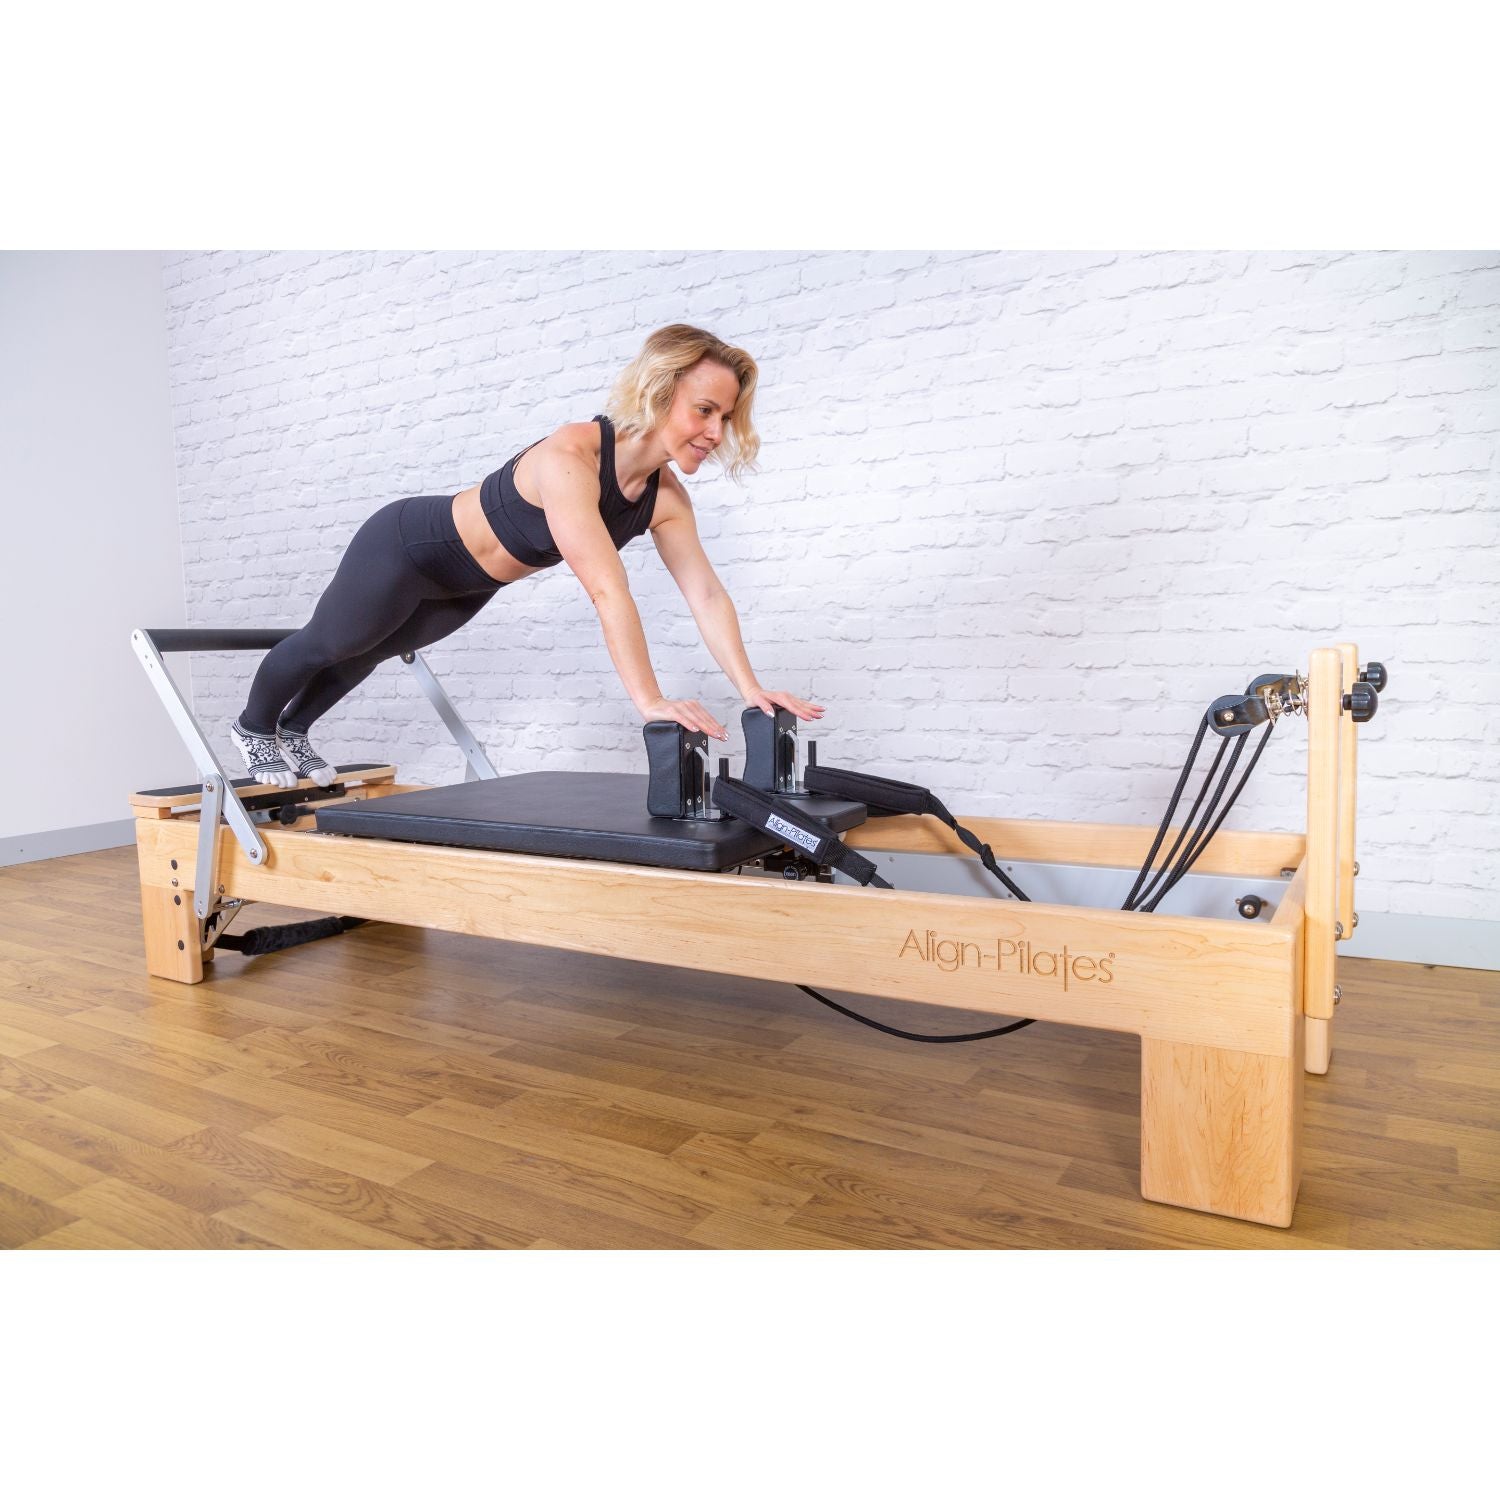 Buy Align Pilates M8 Pro Maple Wood Reformer Machine